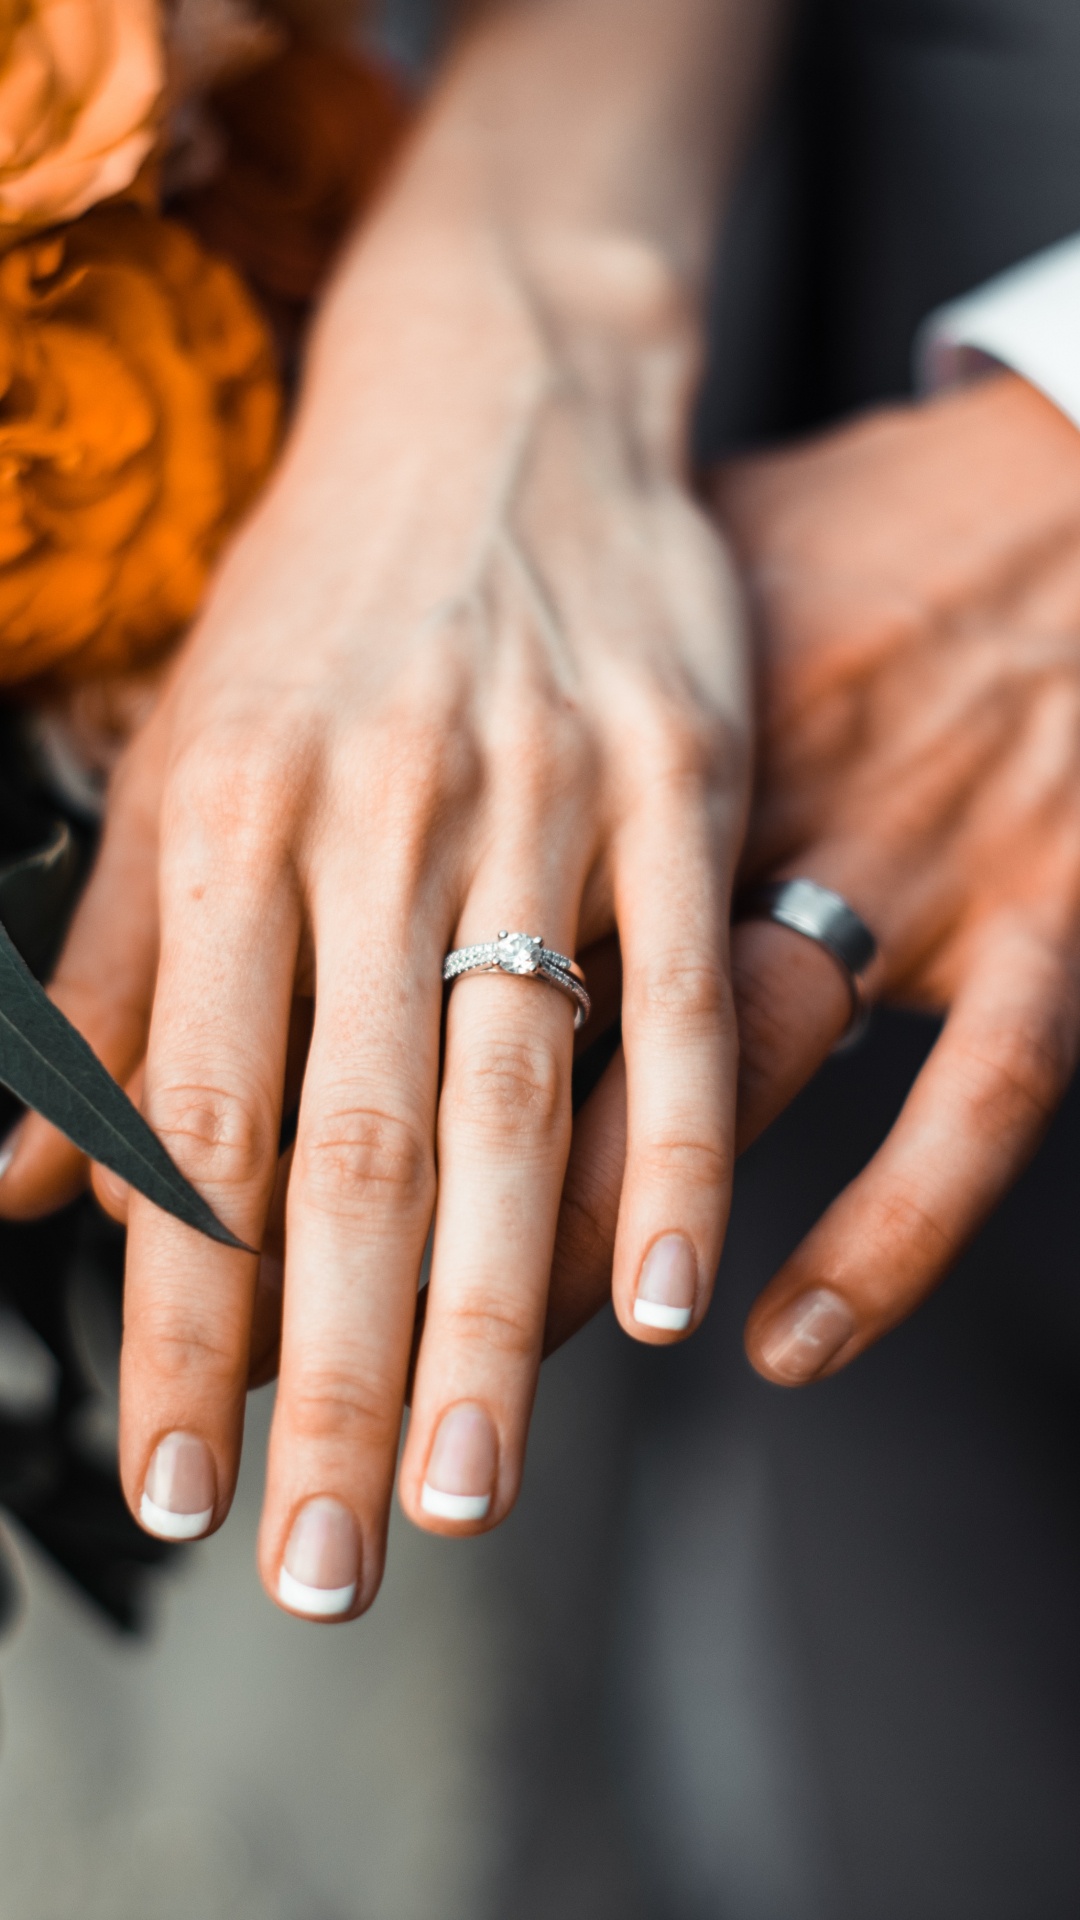 Ring, Wedding Ring, Engagement Ring, Wedding, Engagement. Wallpaper in 1080x1920 Resolution